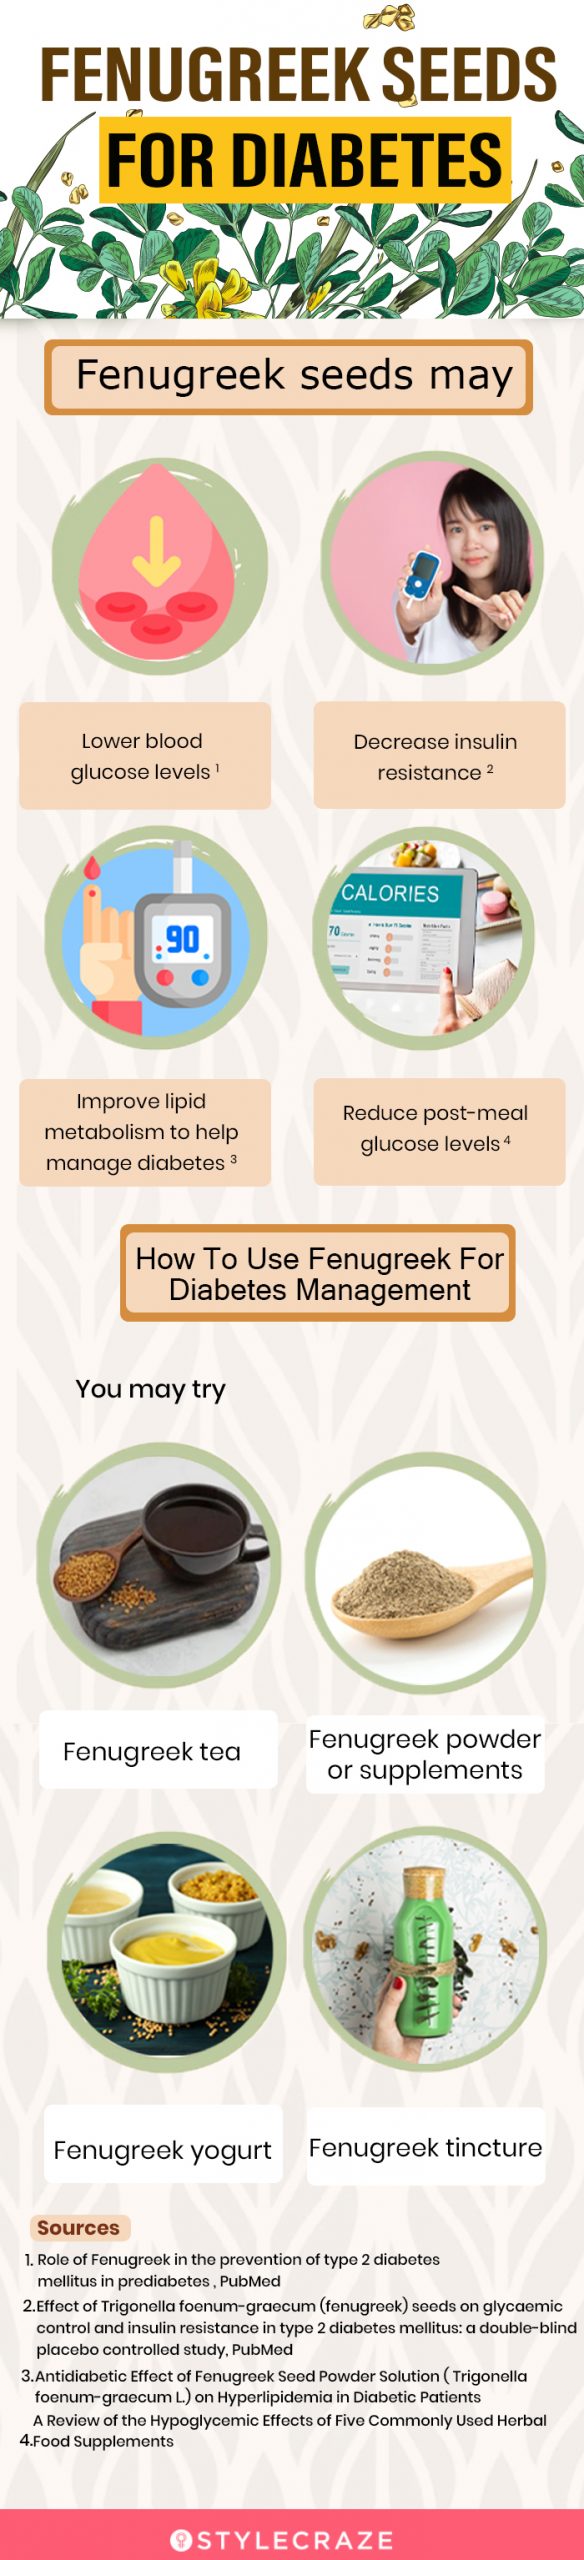 fenugreek seeds for diabetes (infographic)